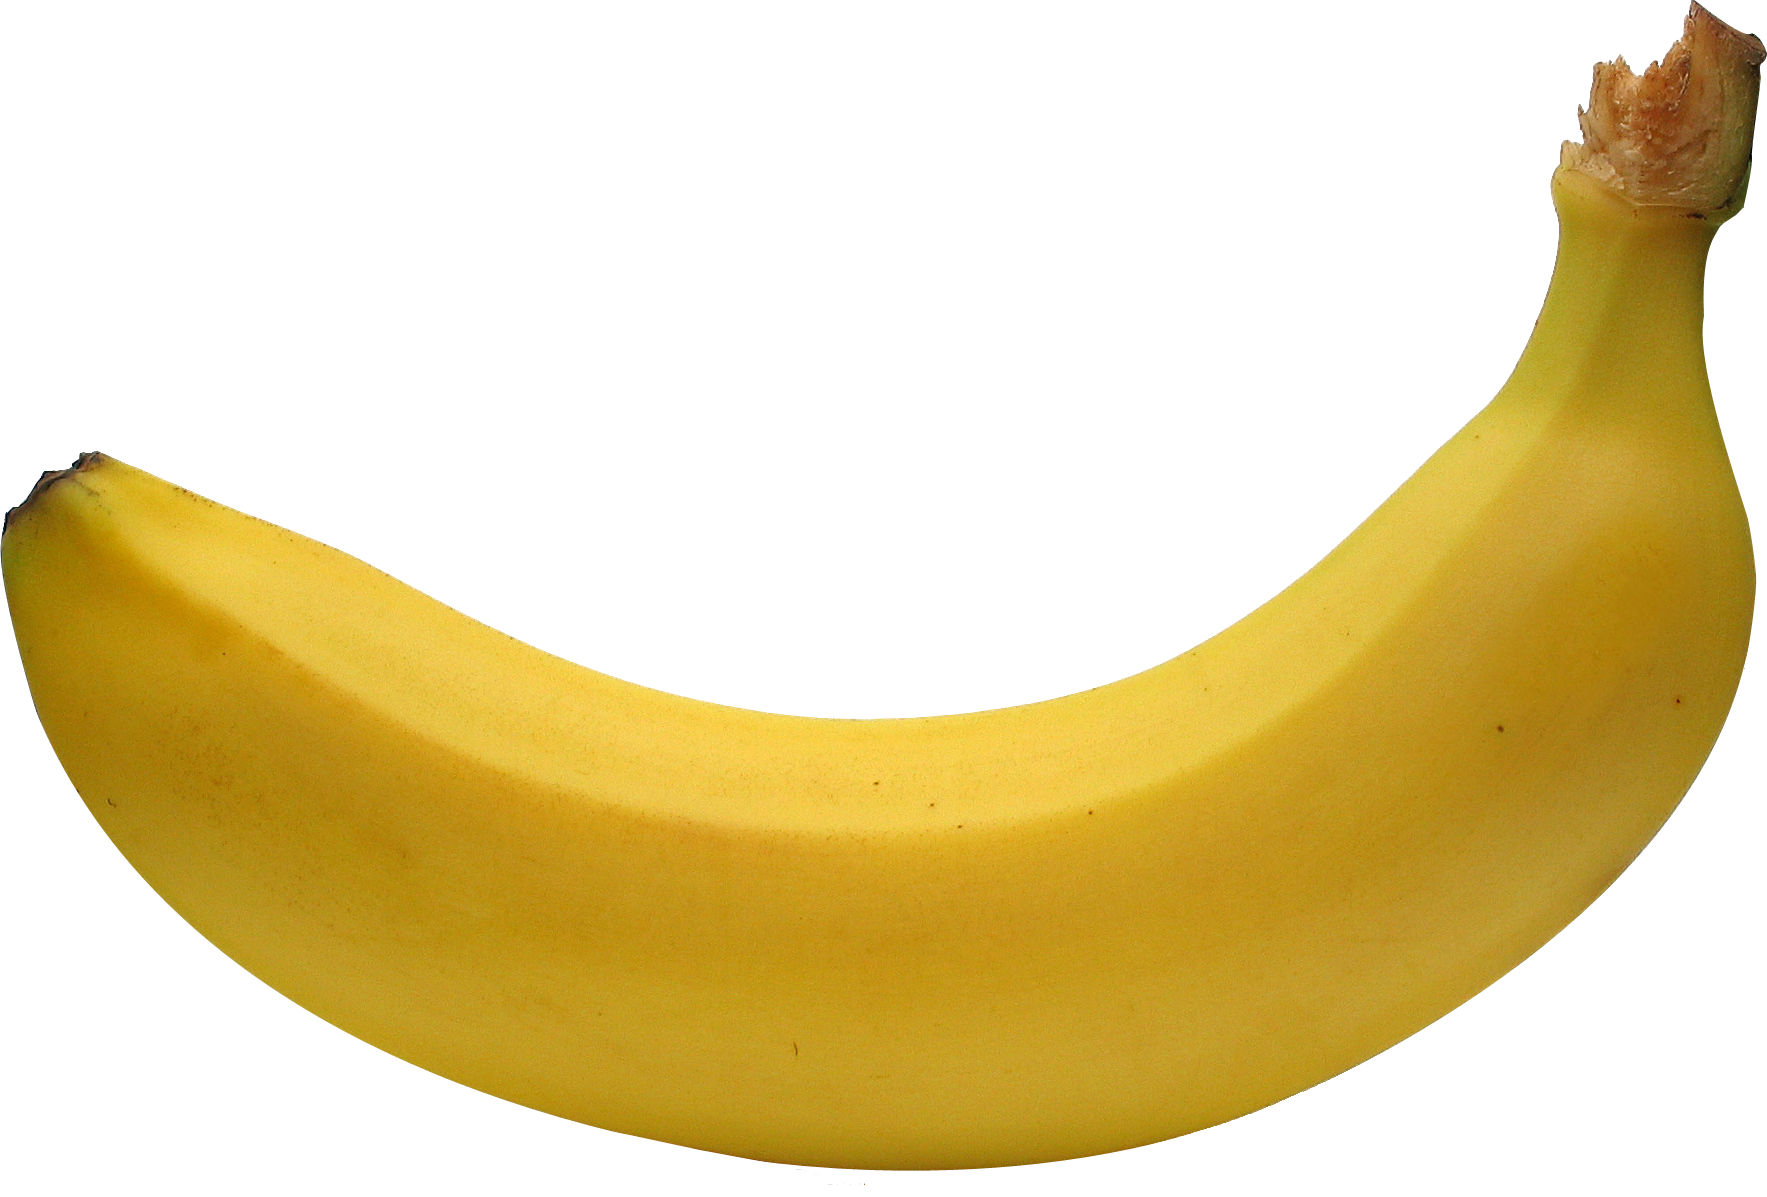 Bananas are rich in potassium